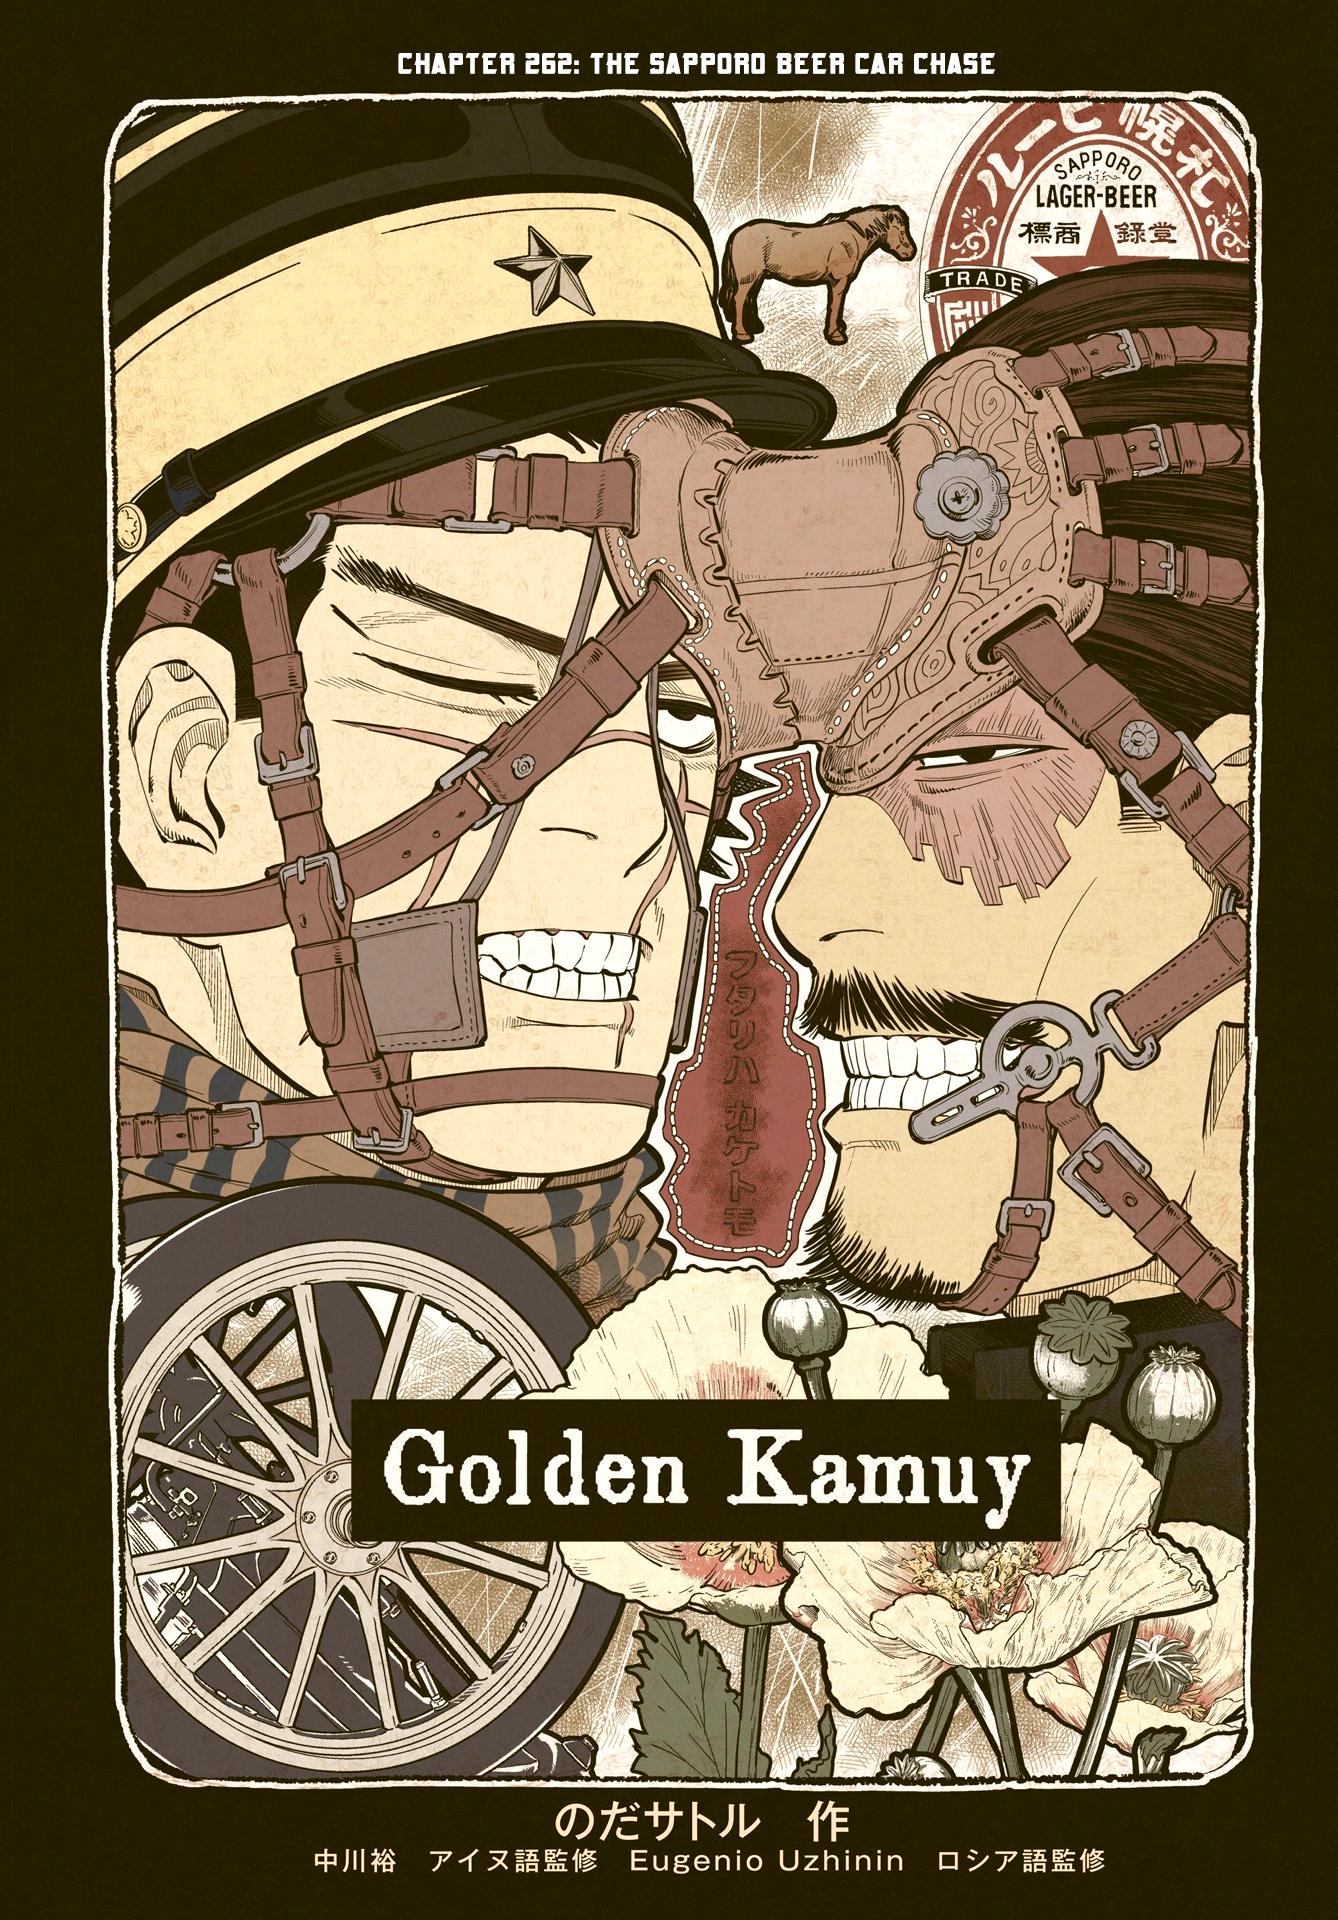 Golden Kamui Vol 23 Ch 262 Page 1 Mangago